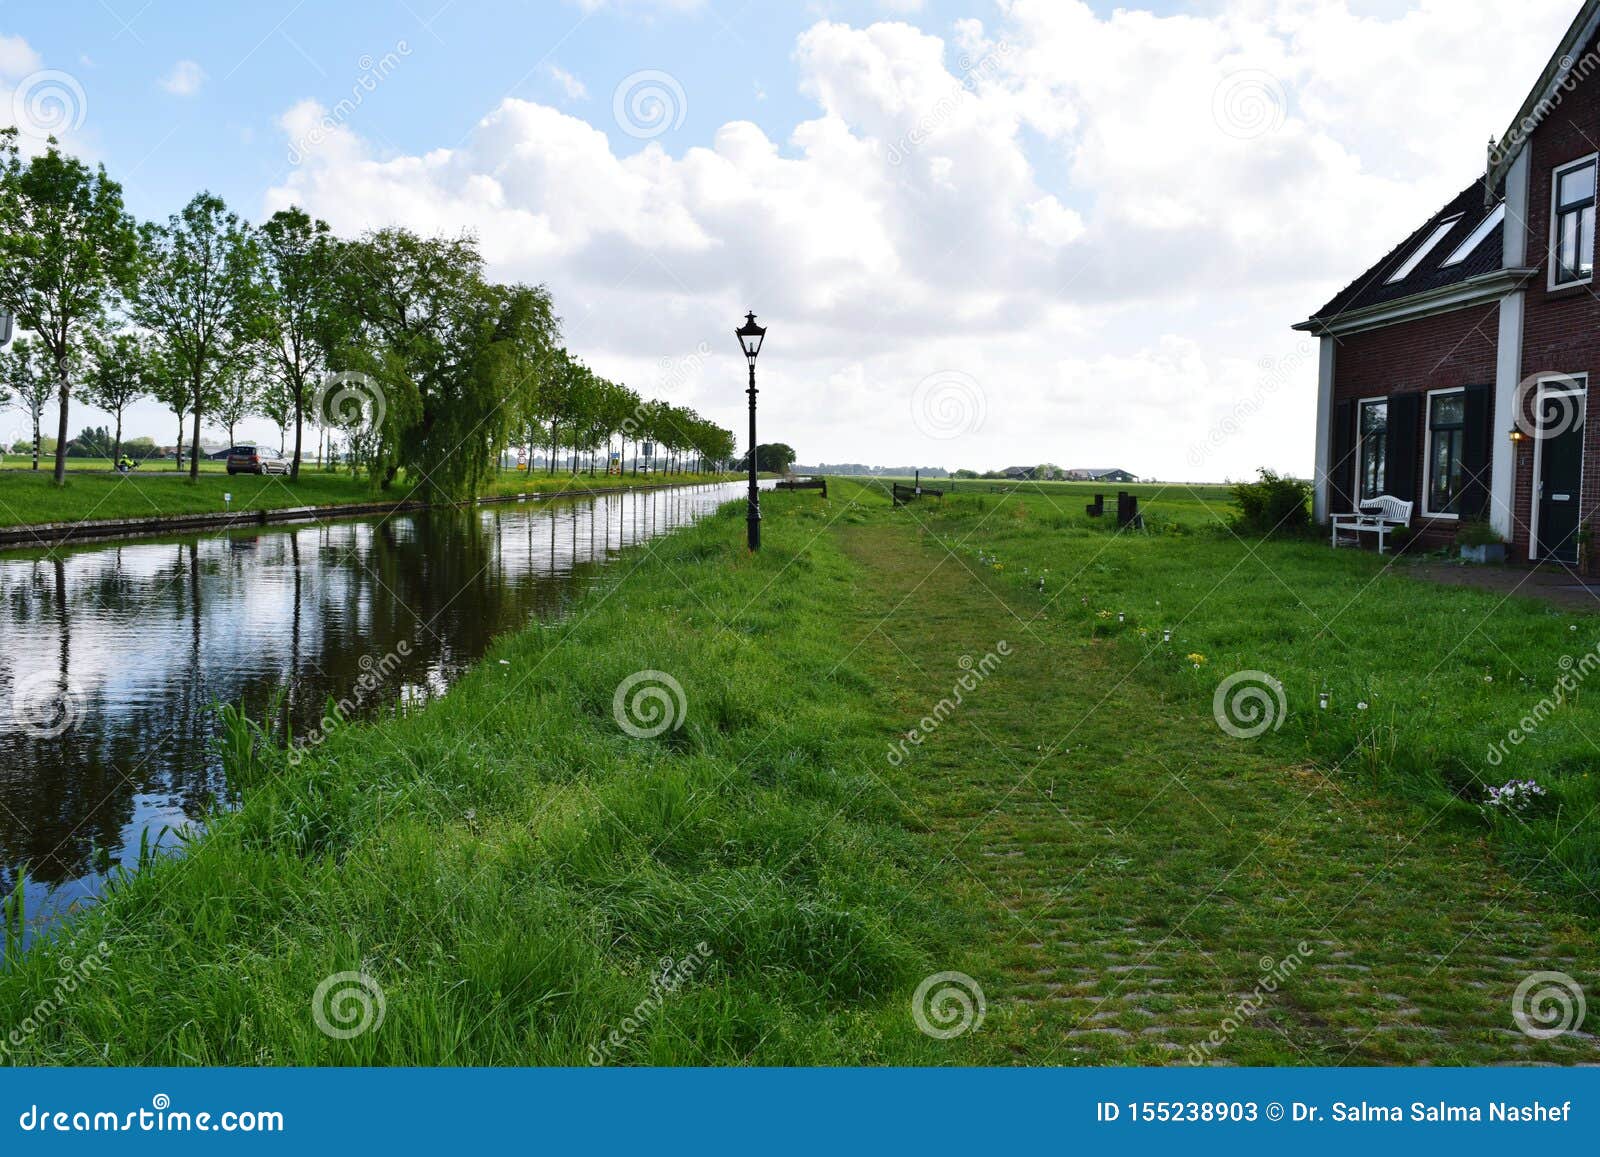 Kredsløb hjemme Sociale Studier Nature, Holland stock image. Image of water, trees, green - 155238903